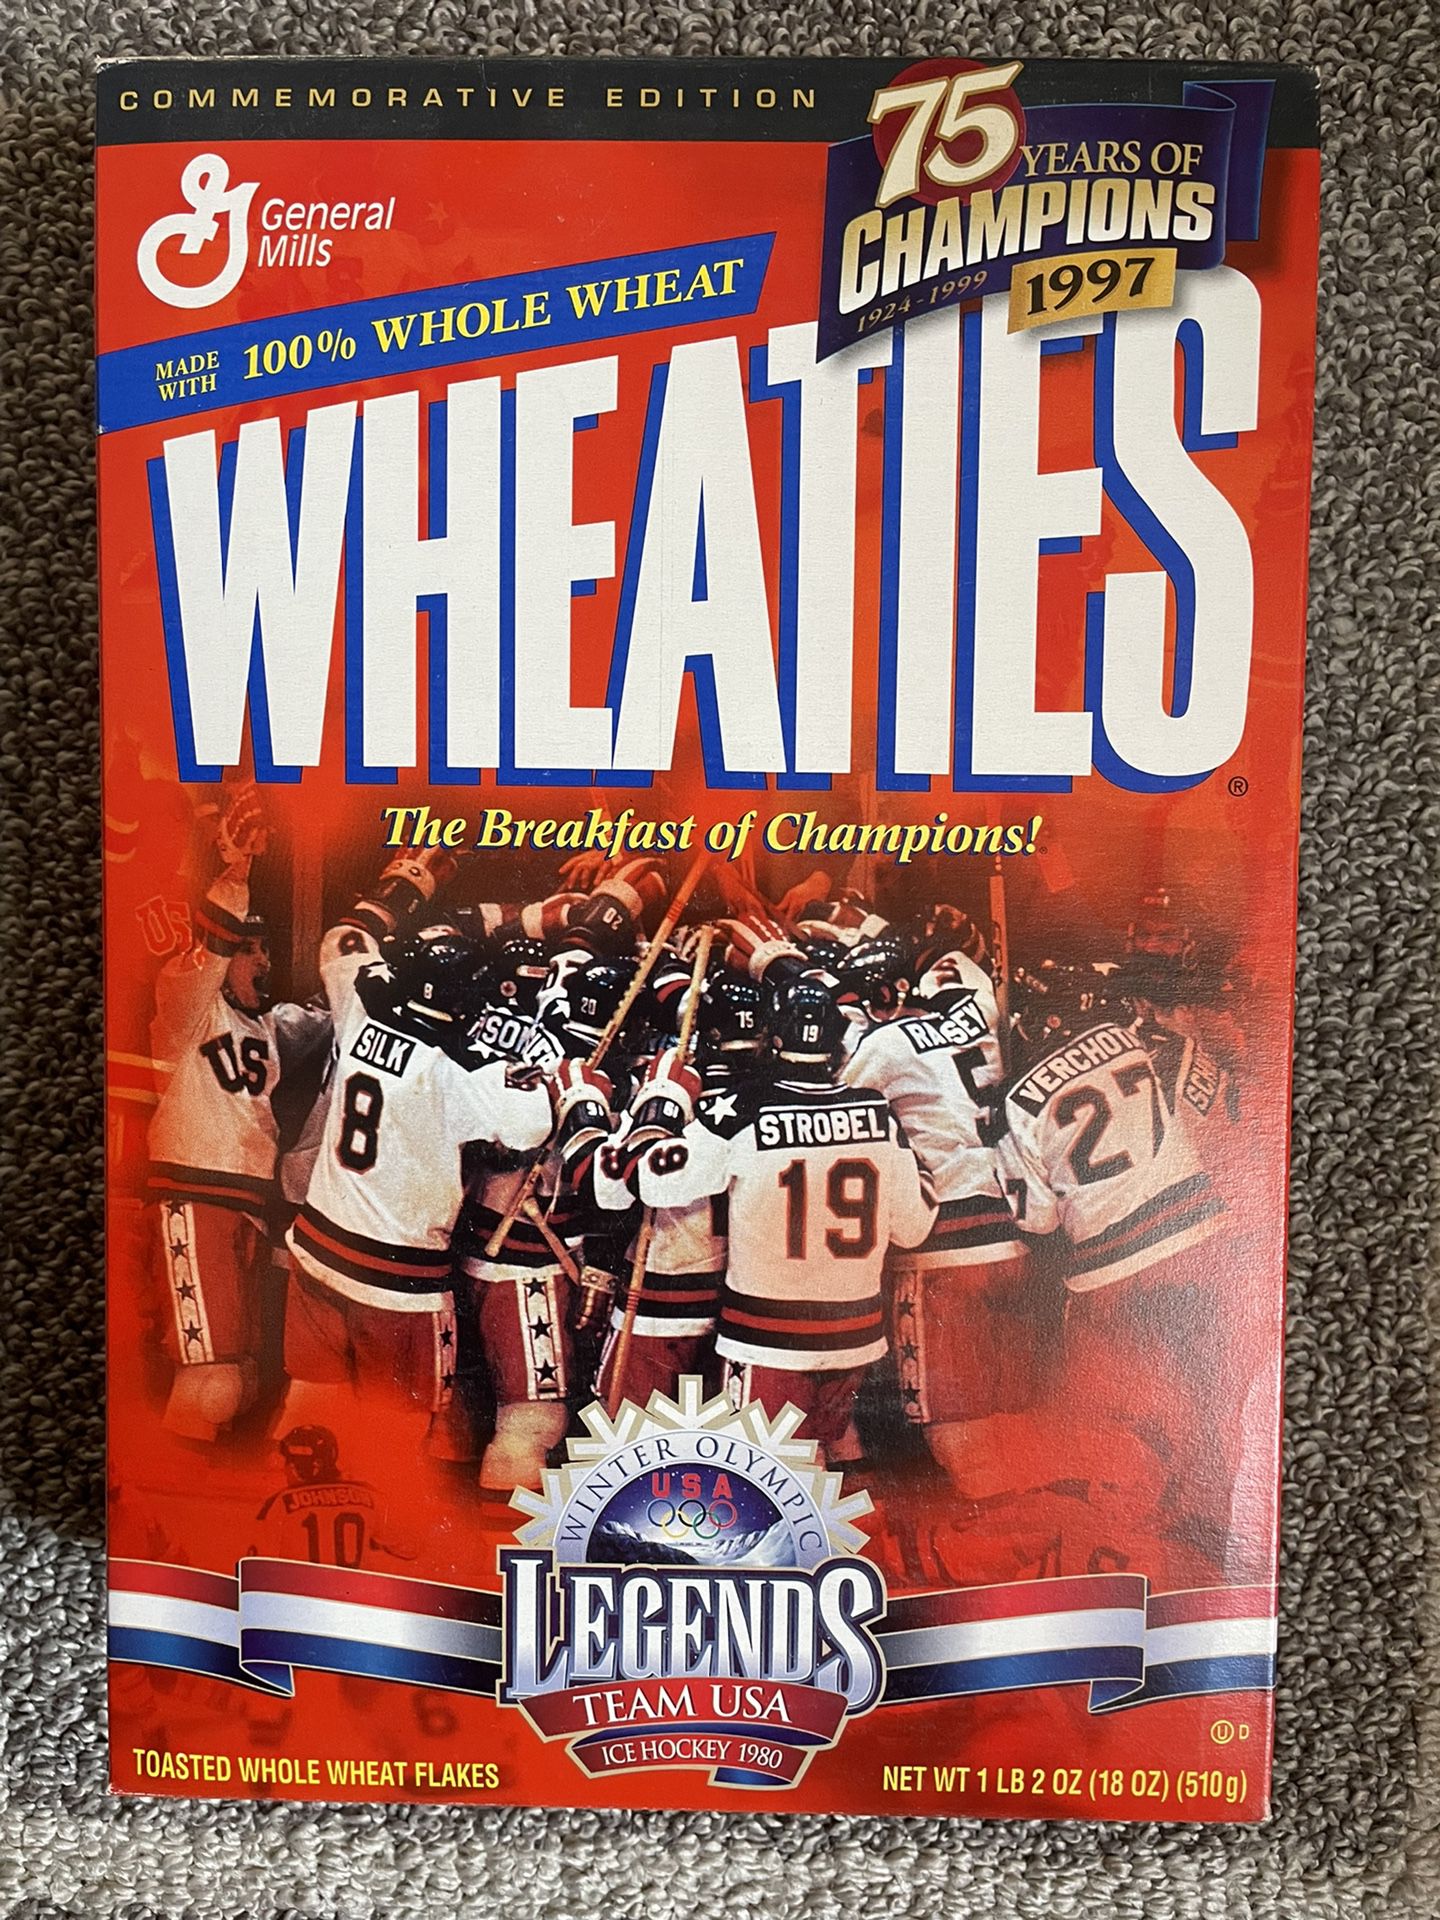 1997 Ice Hockey 1980 Team USA Winter Olympics Legends Commemorative Wheaties Box